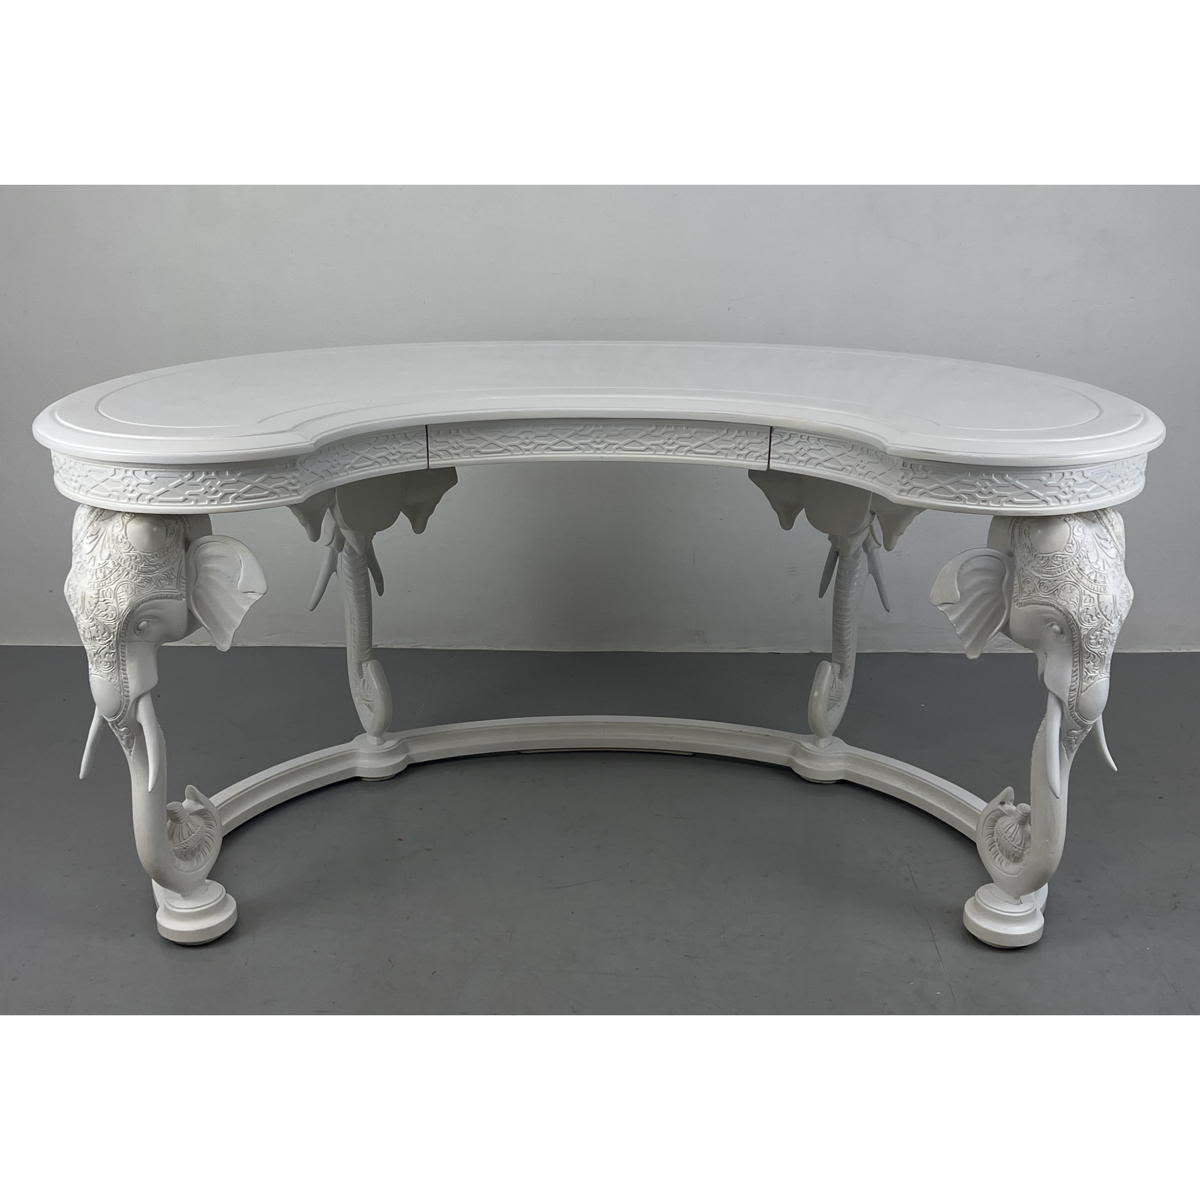 Carved Elephant Heads Desk Table  2a7640